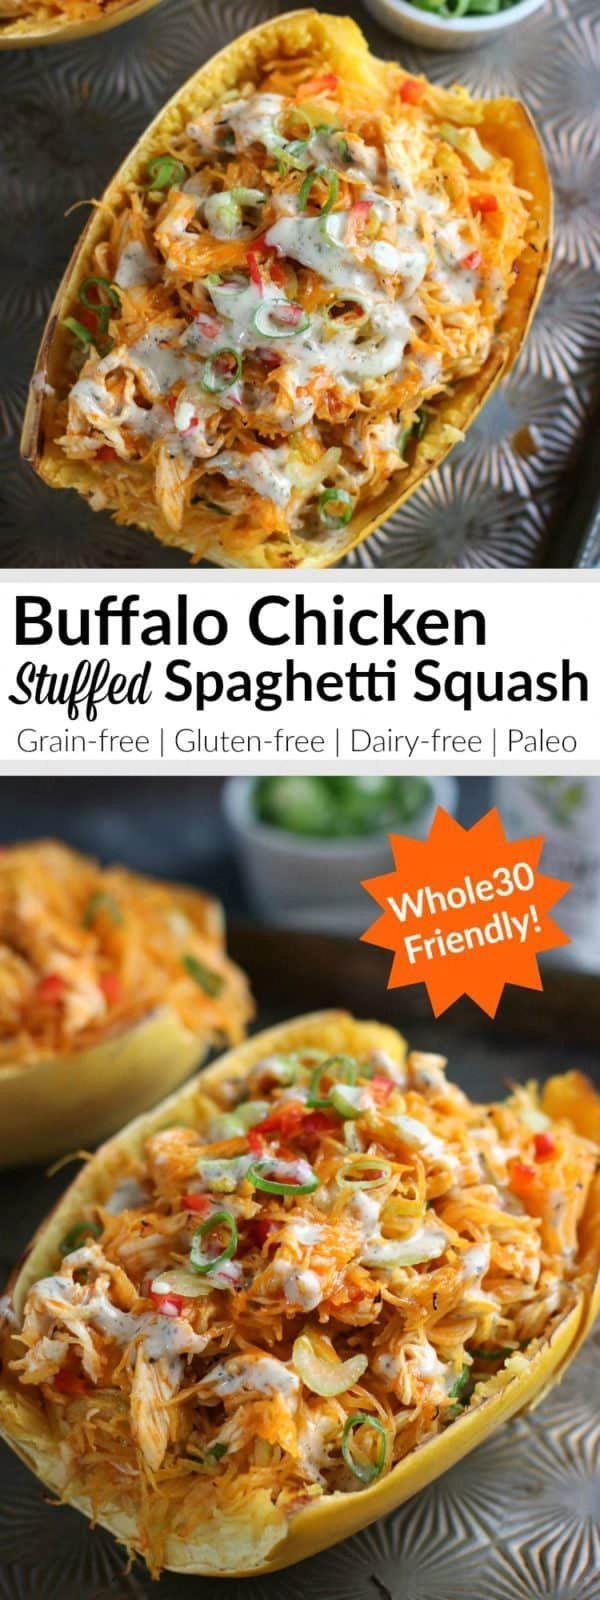 Buffalo Chicken Stuffed Spaghetti Squash -   19 dinner recipes for family vegetarian ideas